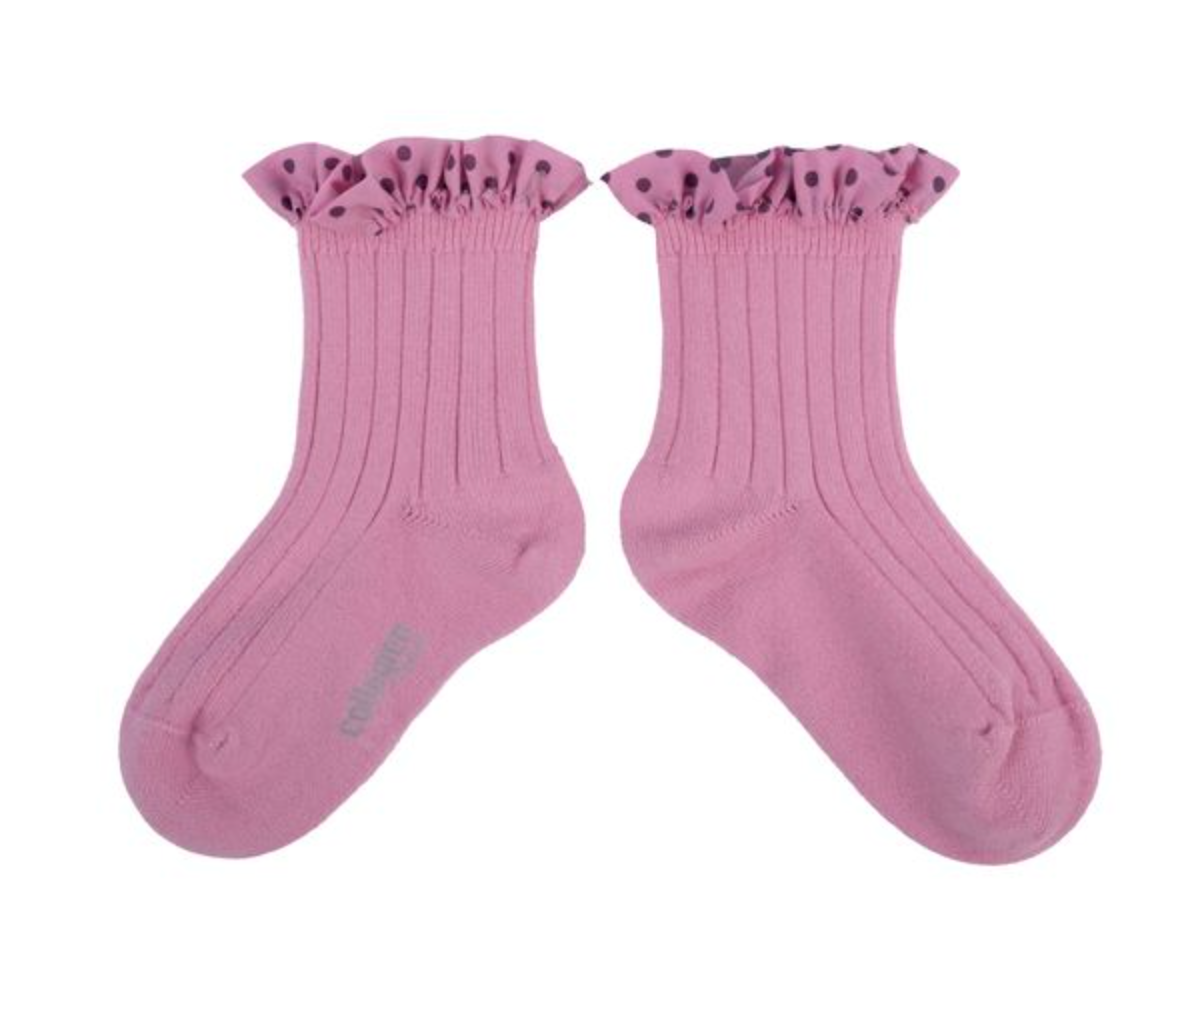 Emilie_Polka Dots Ruffle Ankle Socks_Rose Bonbon